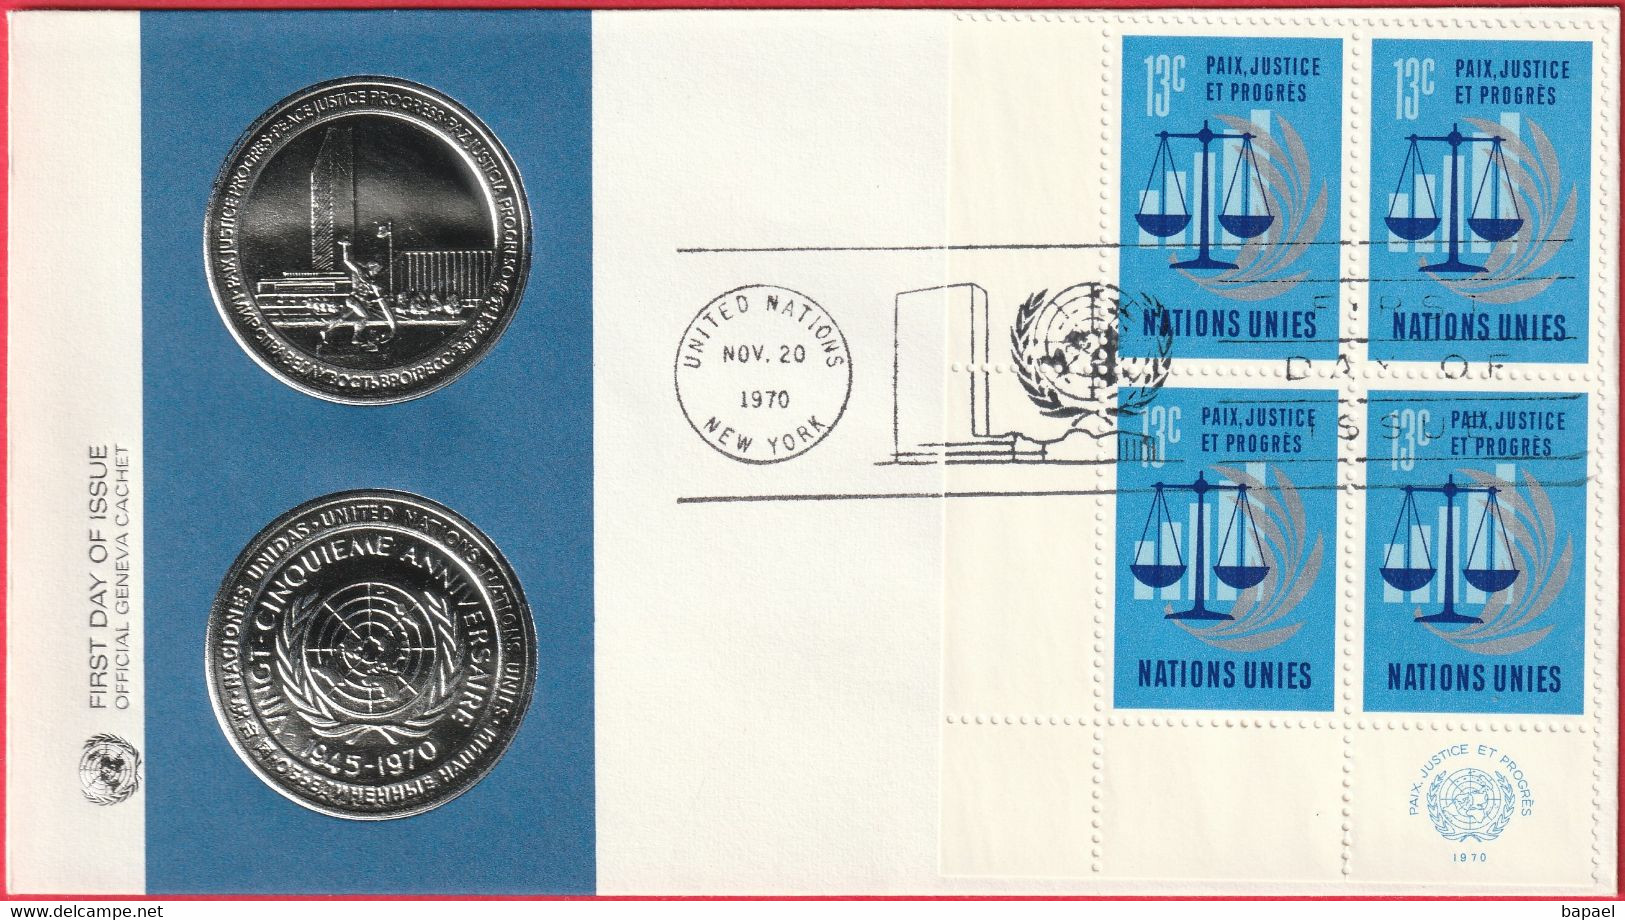 FDC - Enveloppe - Nations Unies - (New-York) (20-11-70) - Paix Justice Et Progrès (2) (Recto-Verso) - Briefe U. Dokumente